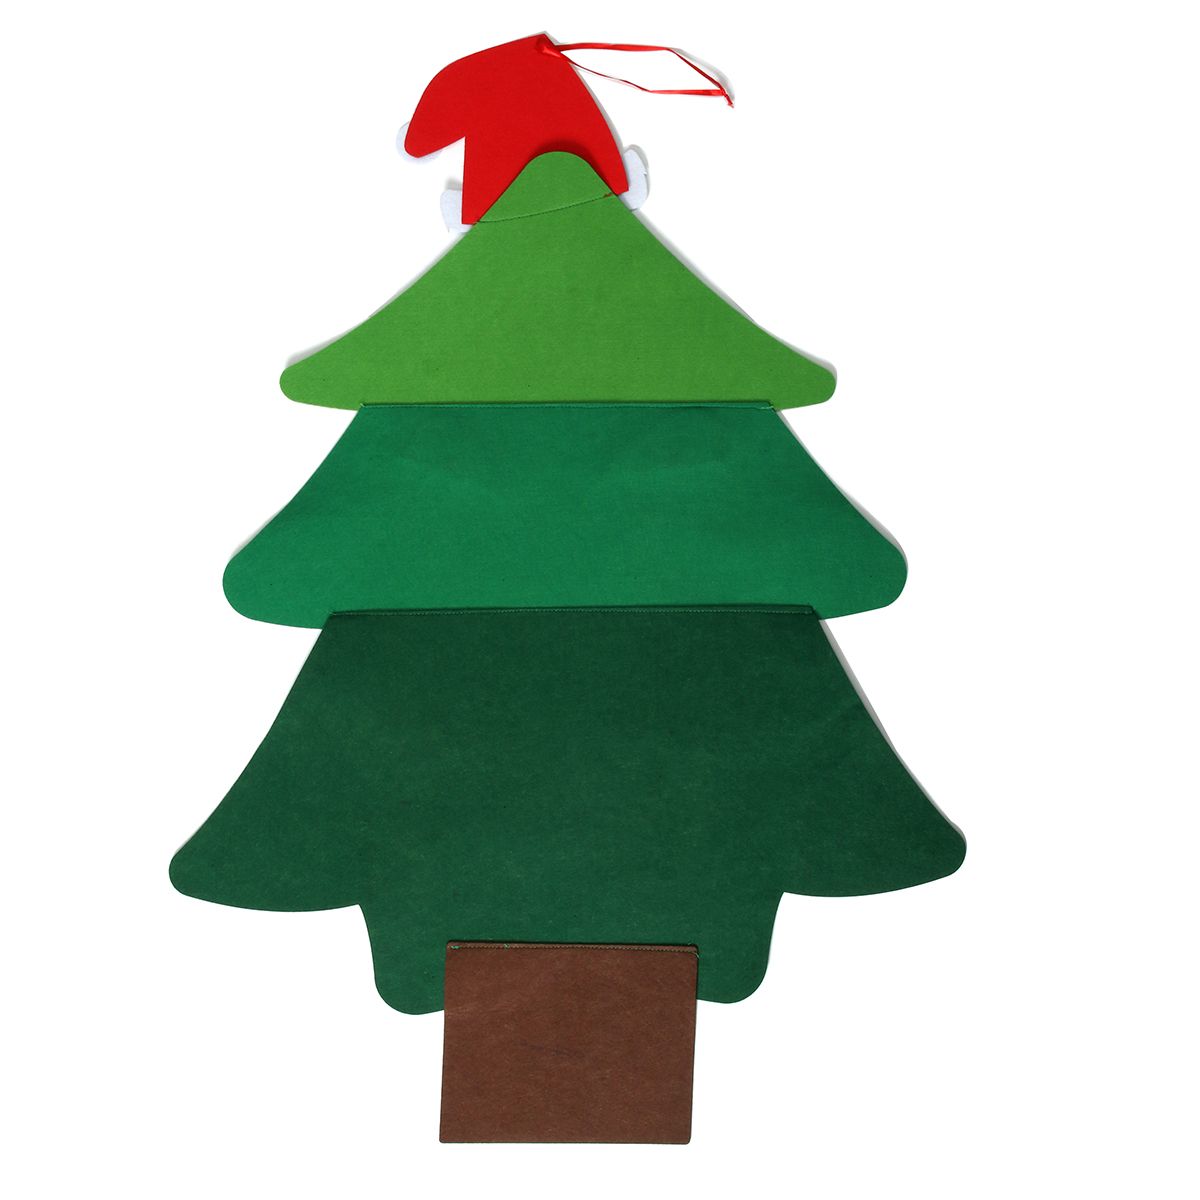 JETEVEN-DIY-Felt-Christmas-Tree-Merry-Christmas-Decorations-1898986